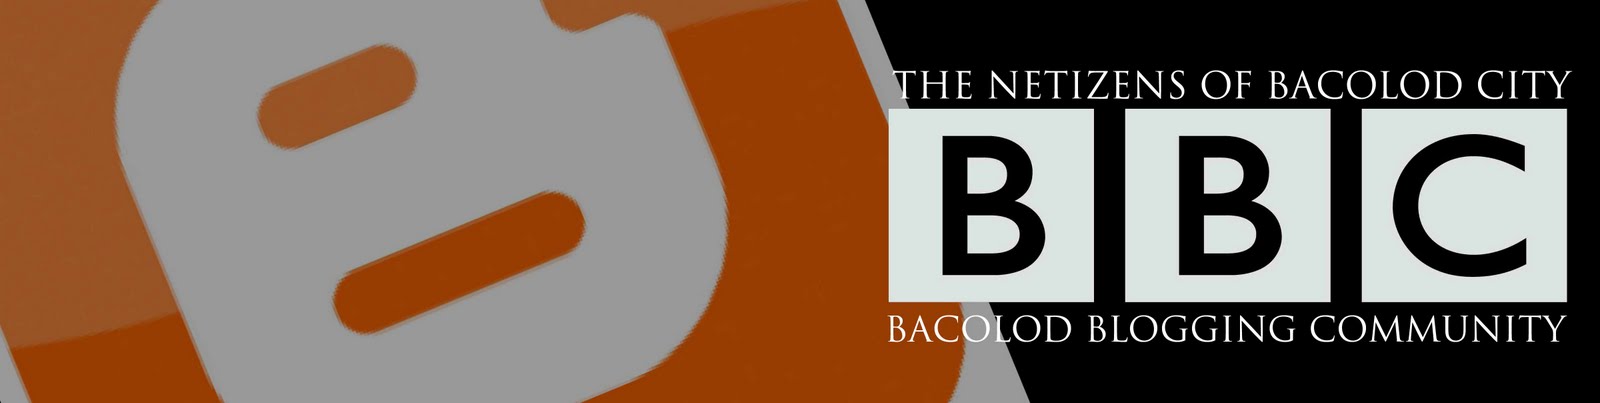 Bacolod Blogging Community